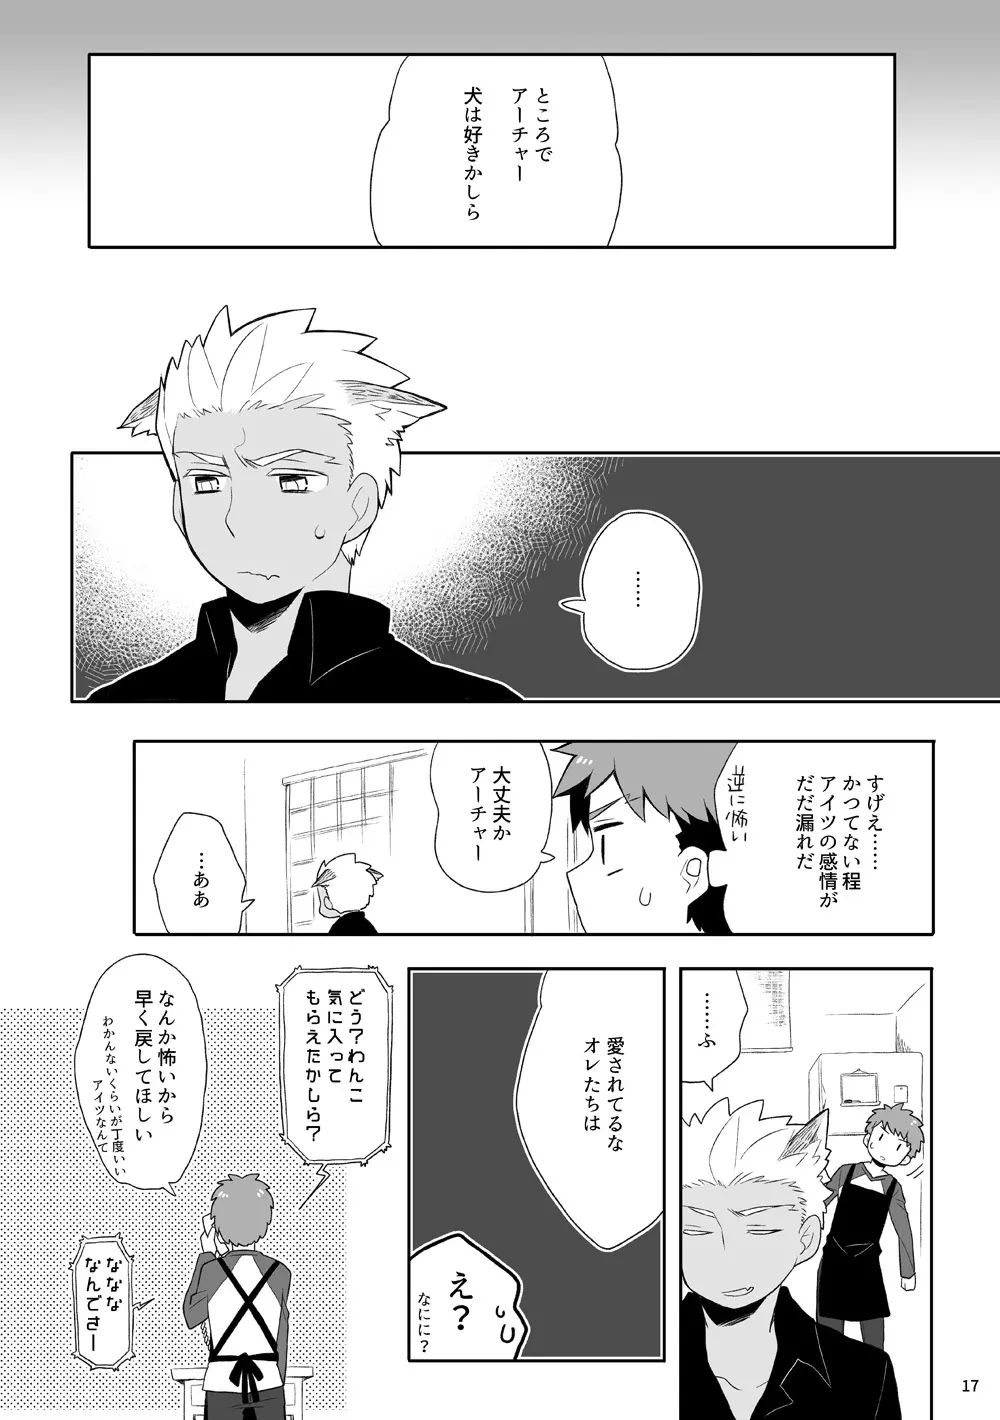 弓士本 - page16